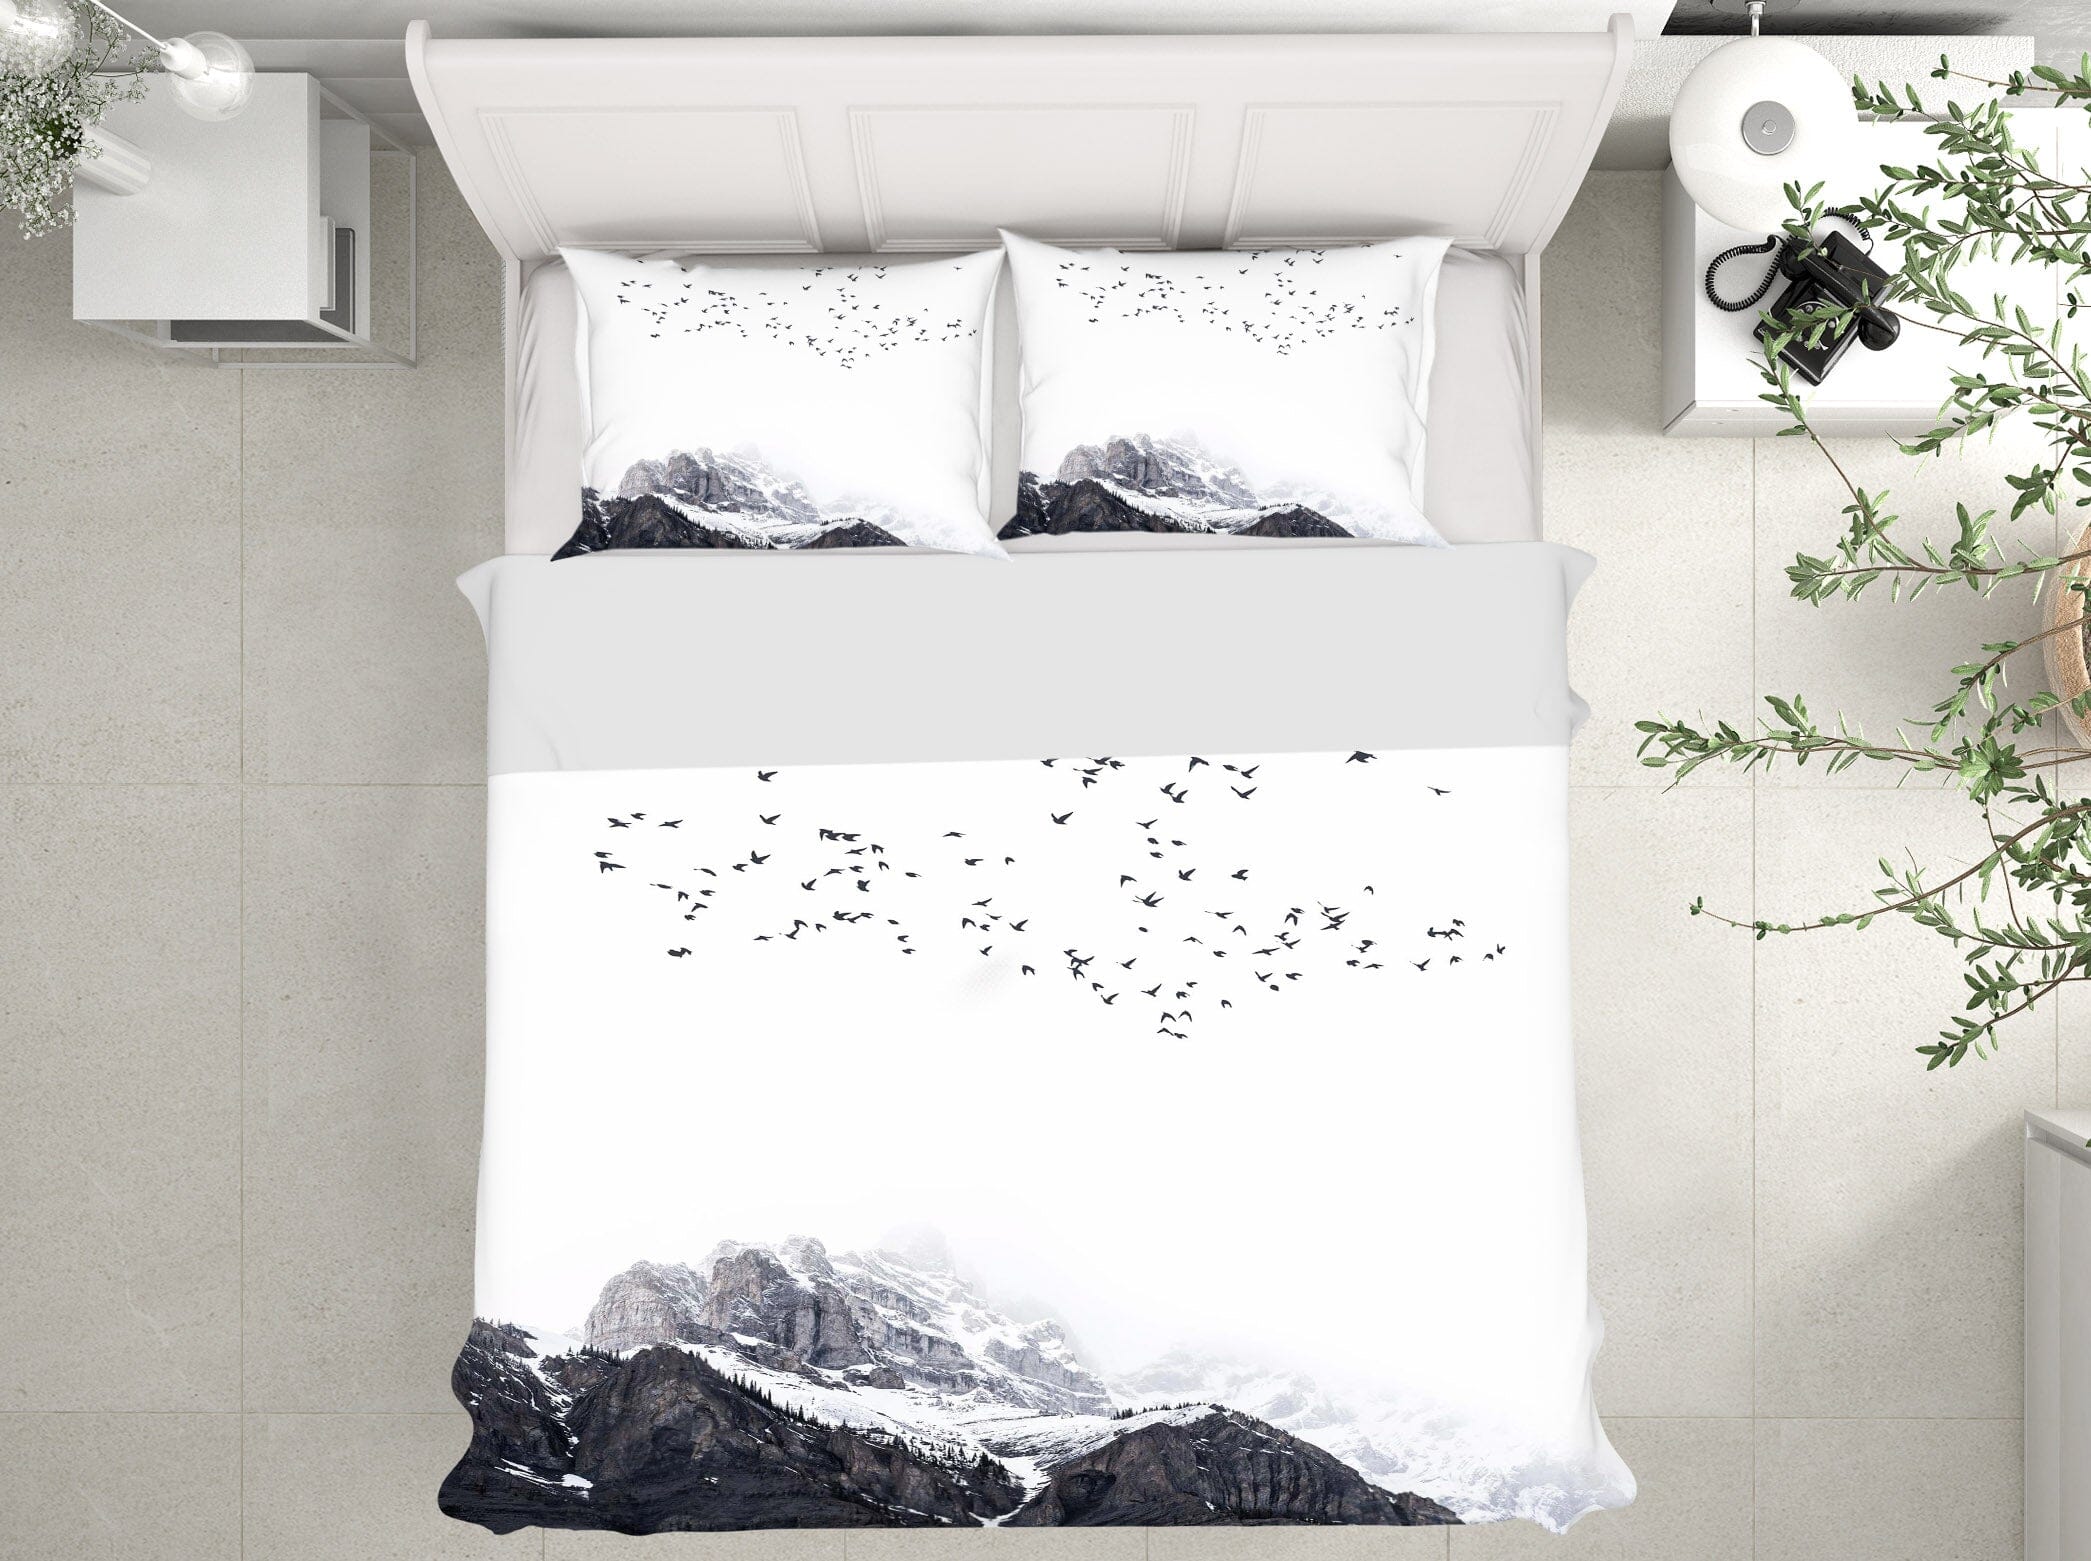 3D The Mountain 2120 Boris Draschoff Bedding Bed Pillowcases Quilt Quiet Covers AJ Creativity Home 